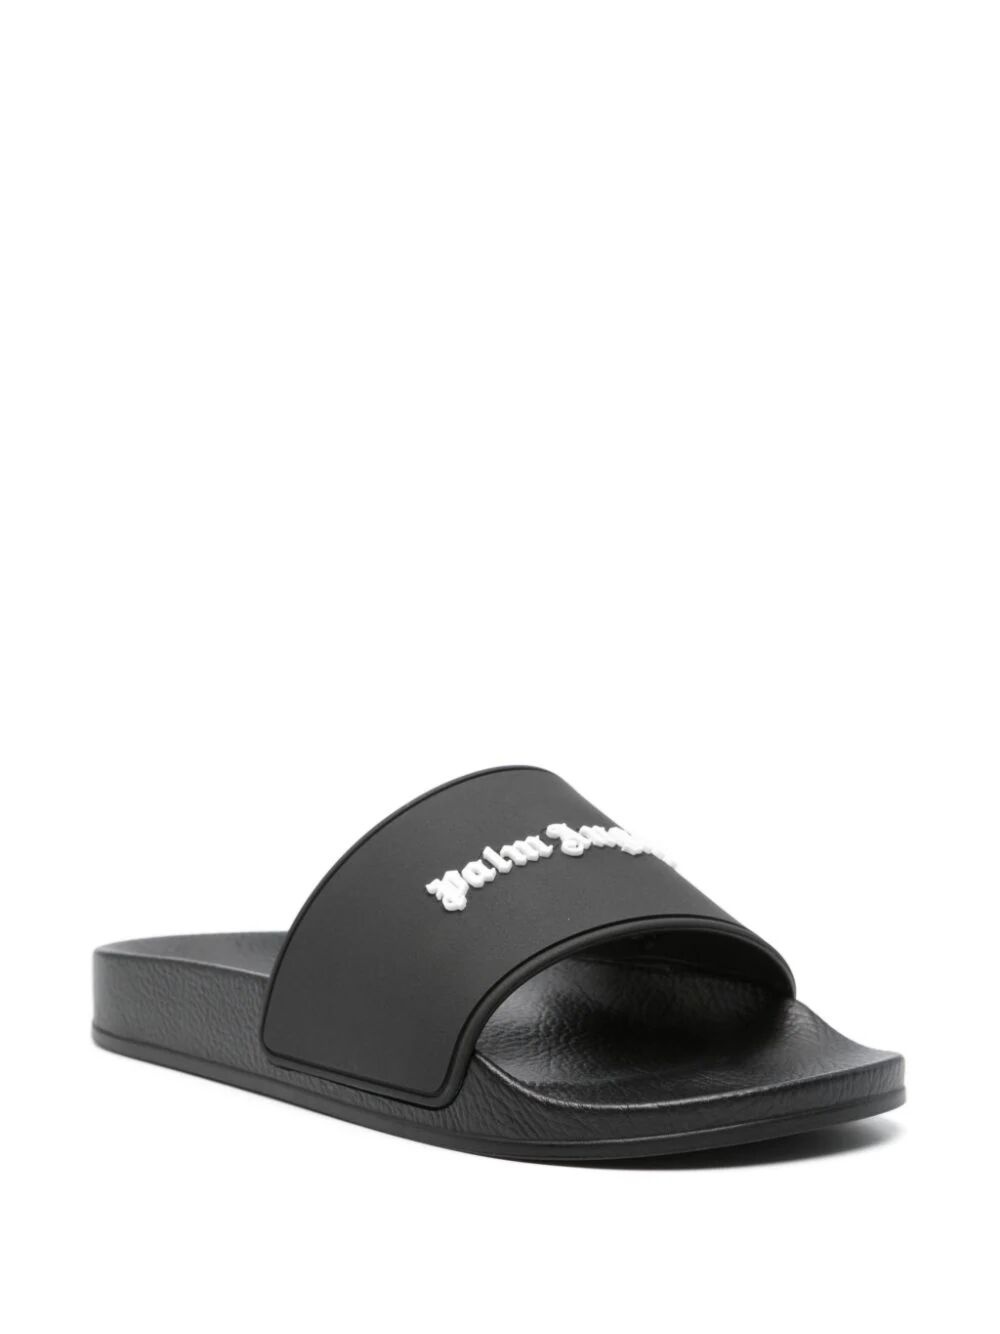 Slides sandals with embossed logo - 2